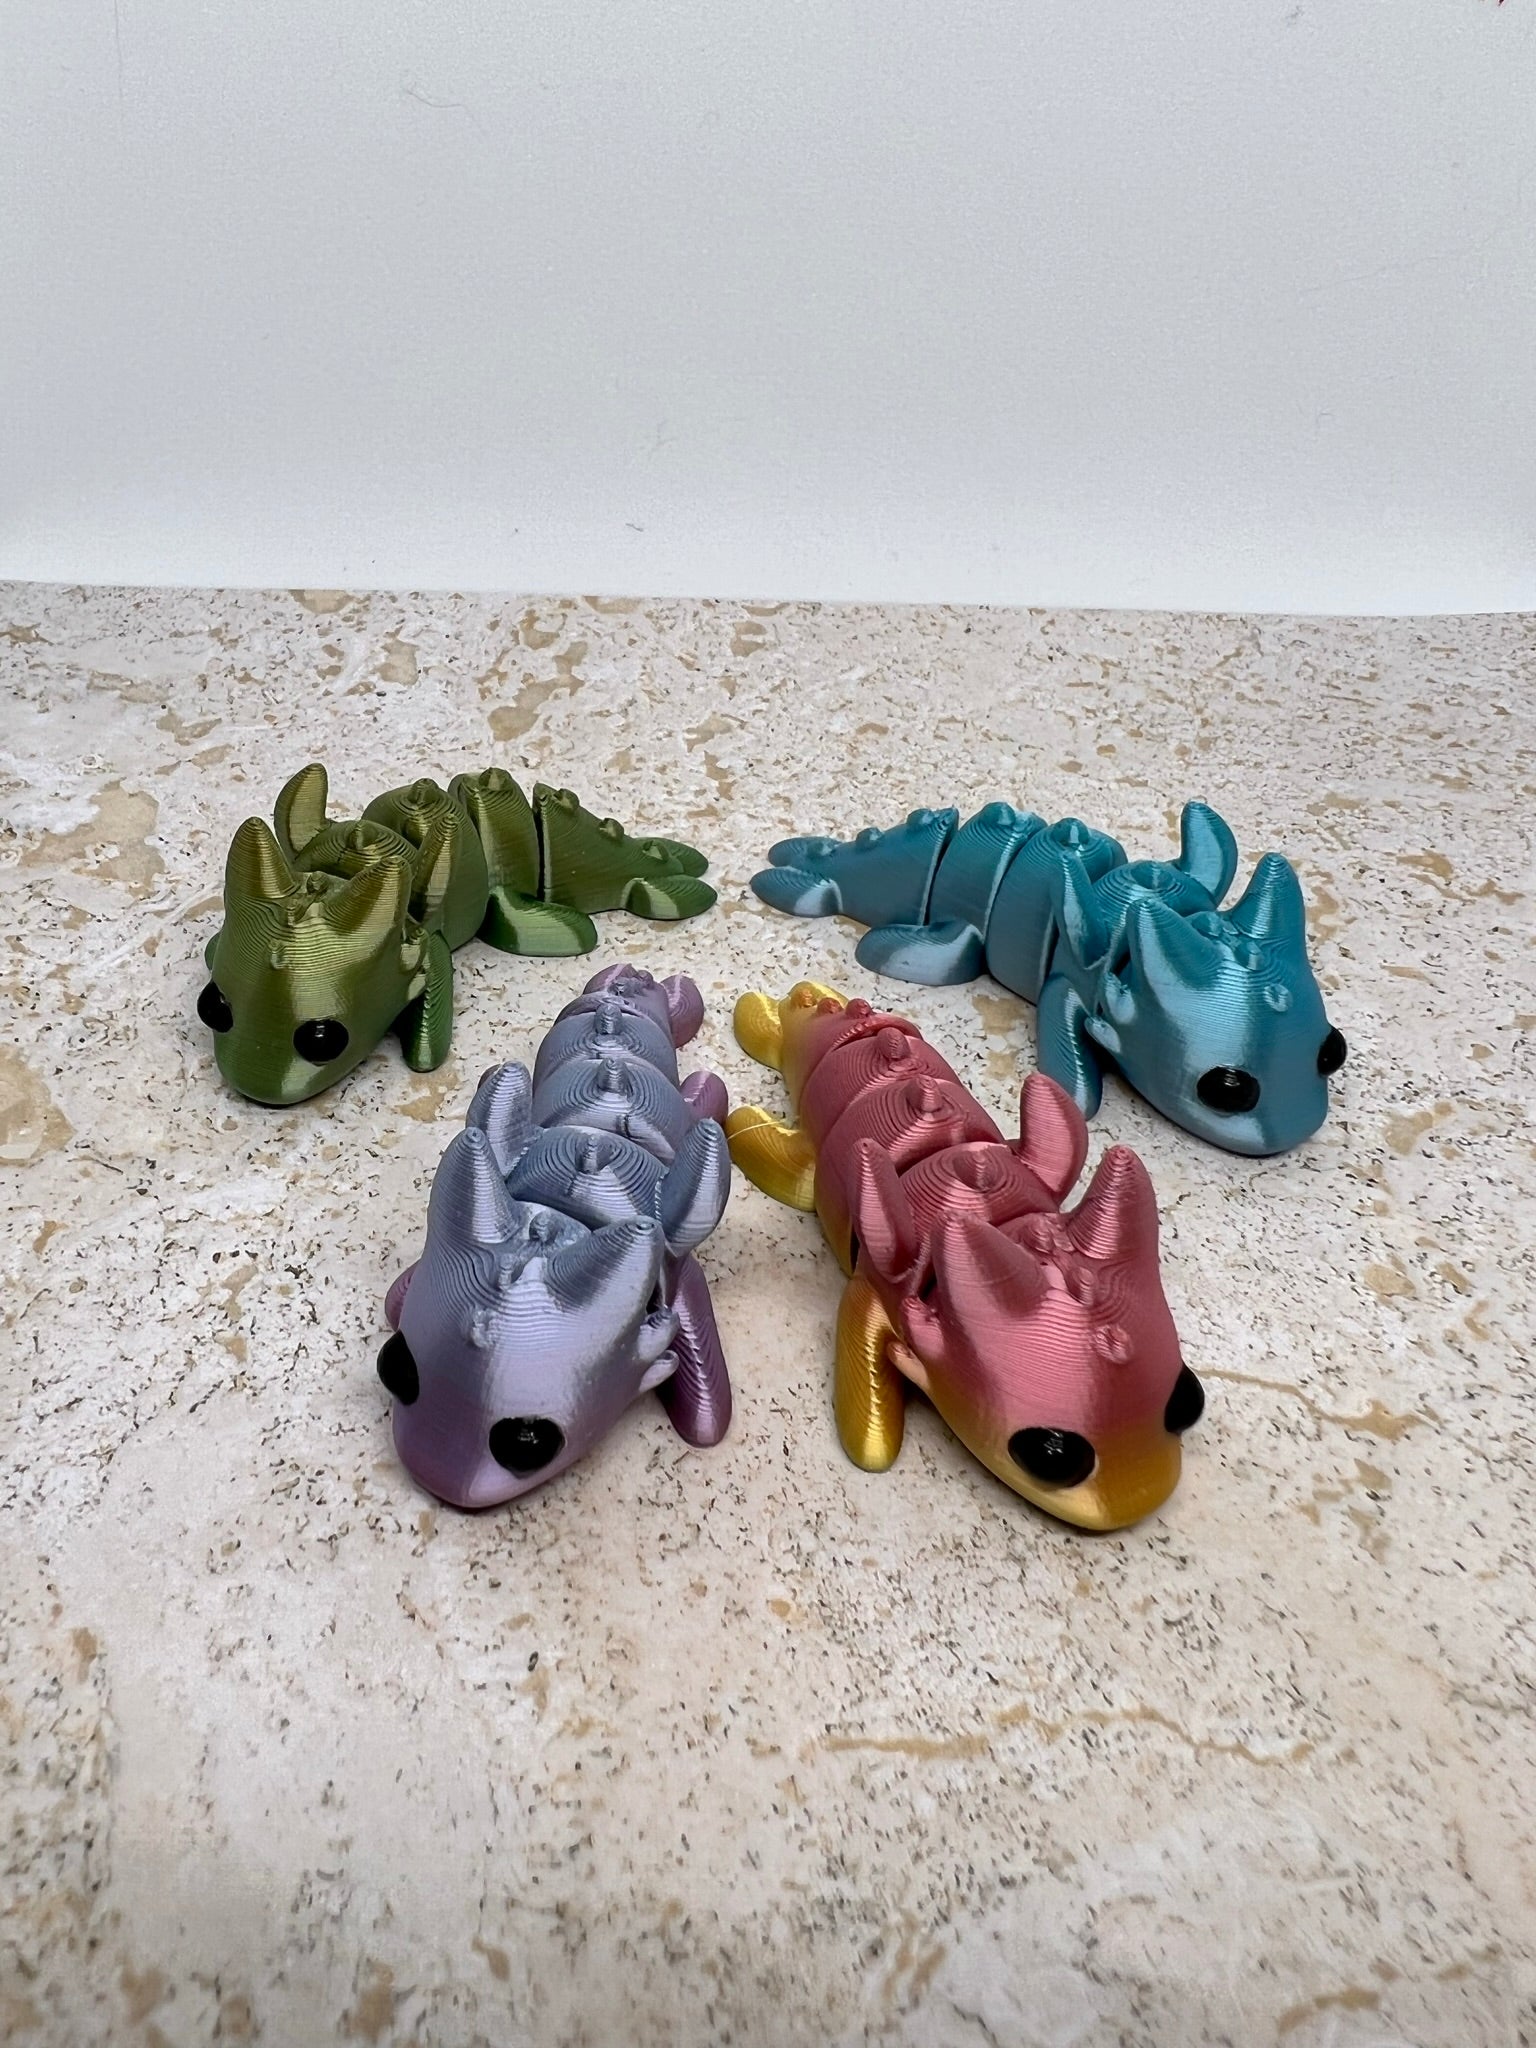 Baby Crystal Dragon- Rainbow, 3D Printed Dragon, Flexi Toy